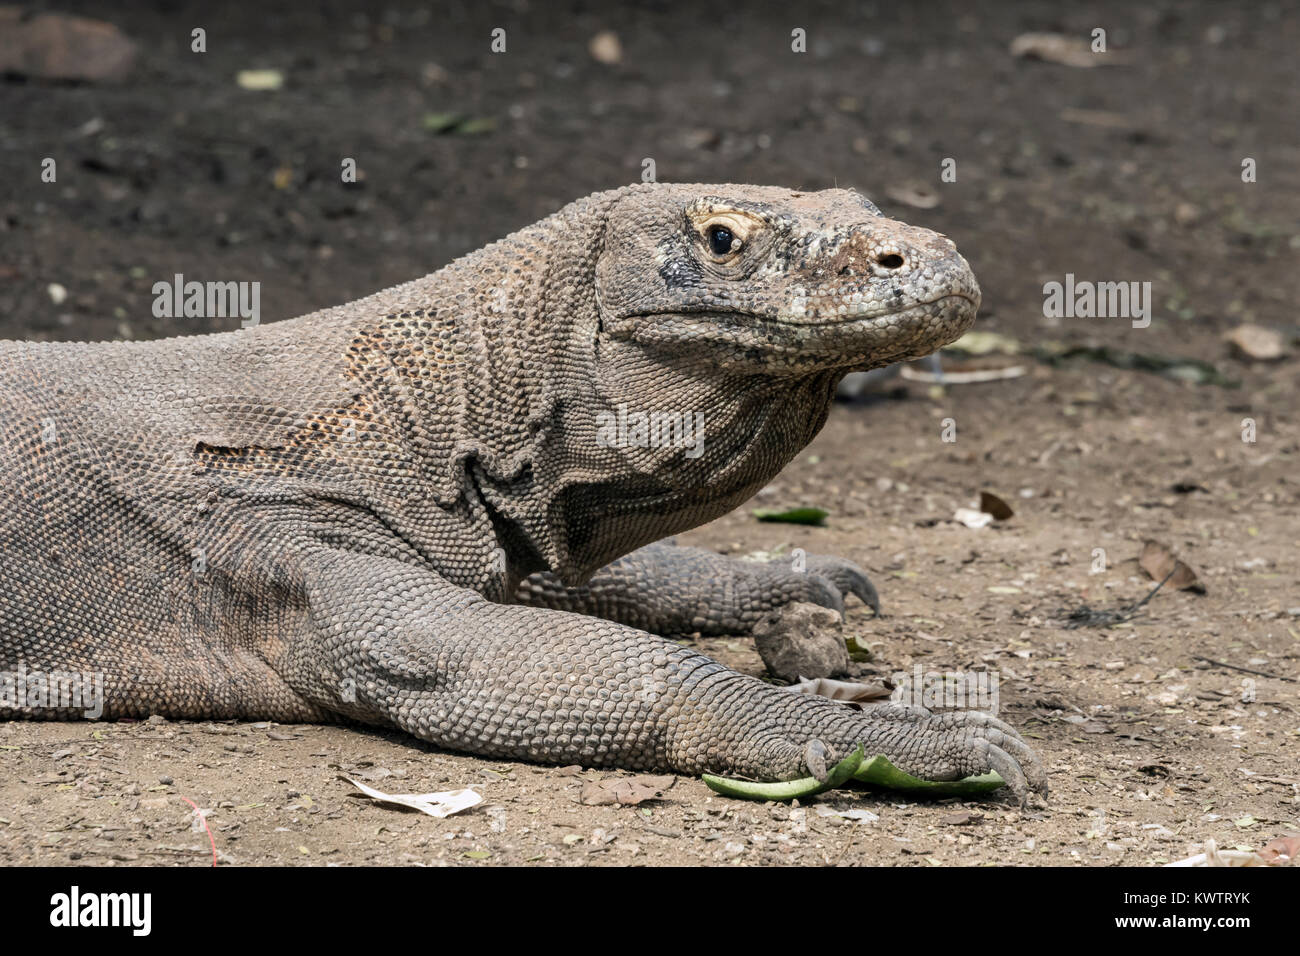 Close-up of a Komodo dragon with patches of shedding skin and ticks, Loh Buaya Komodo NP, Rinca Island, Indonesia Stock Photo